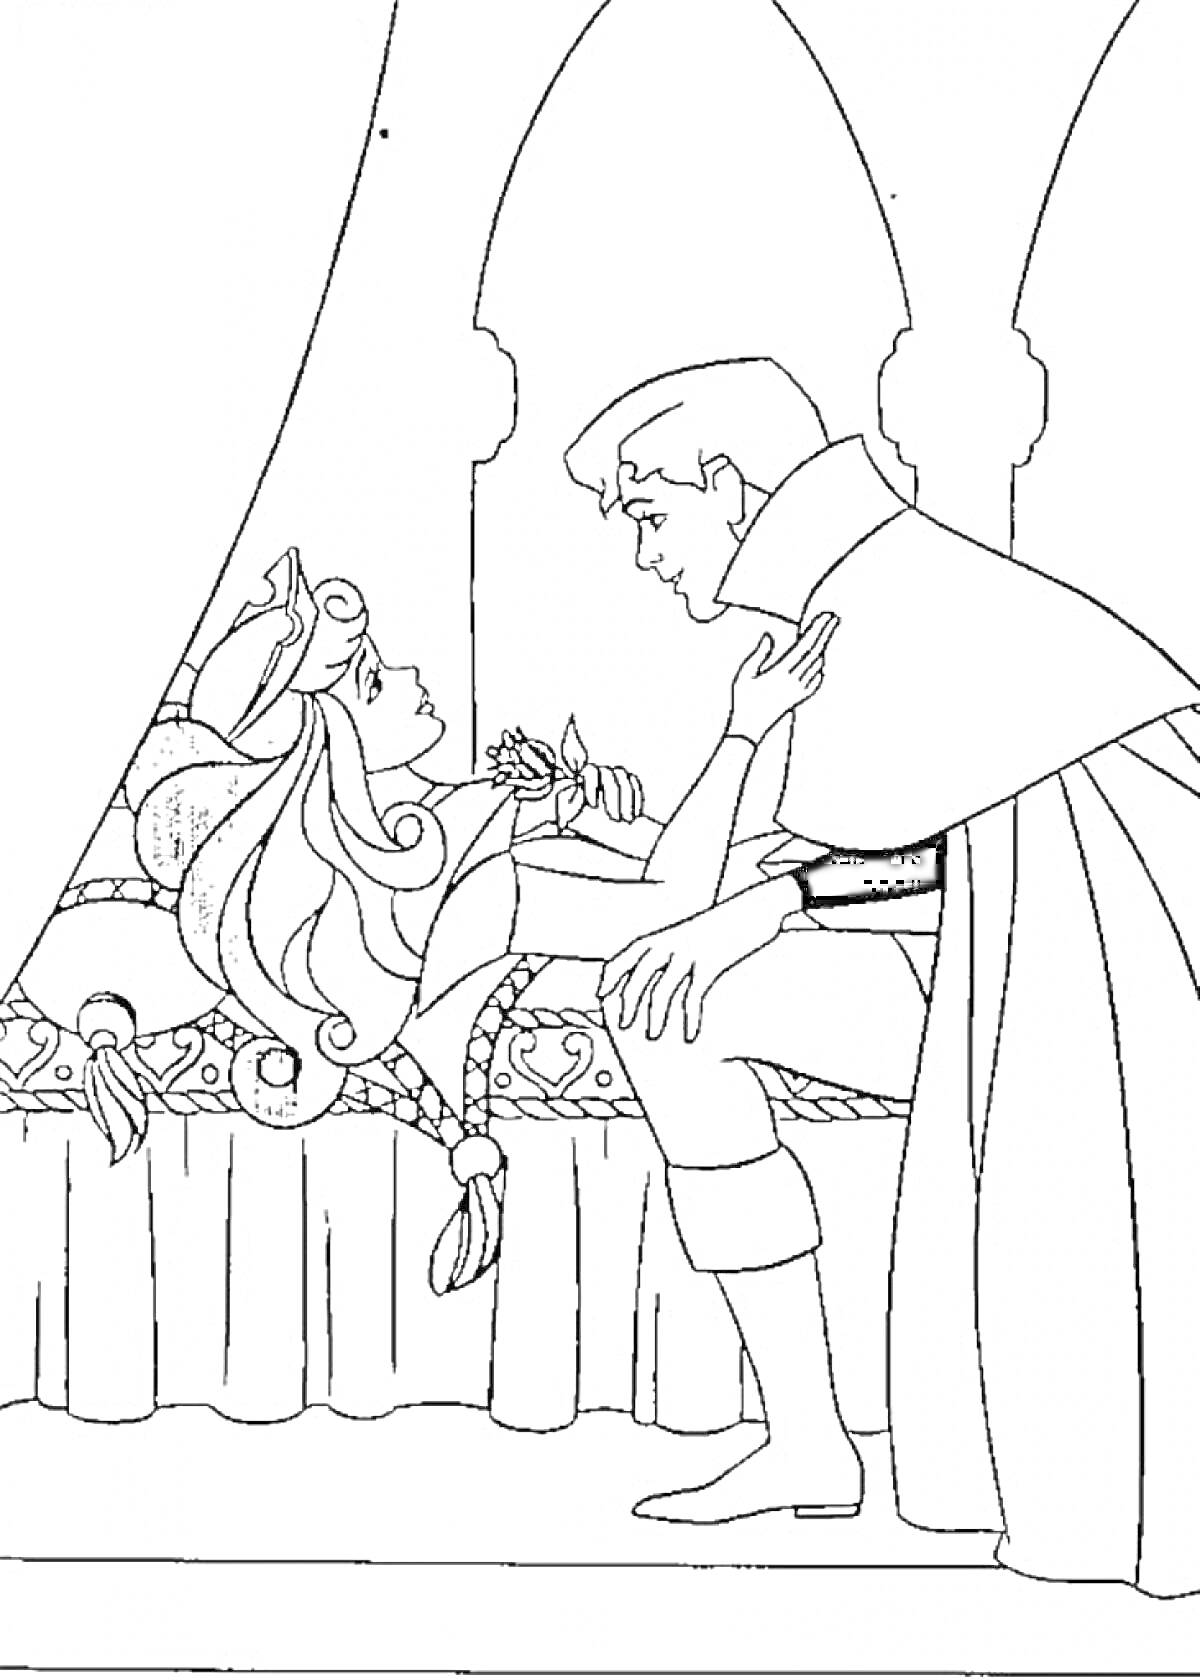 Раскраска Спящая красавица на постели и принц с розой в руке, завеса и арки на заднем плане